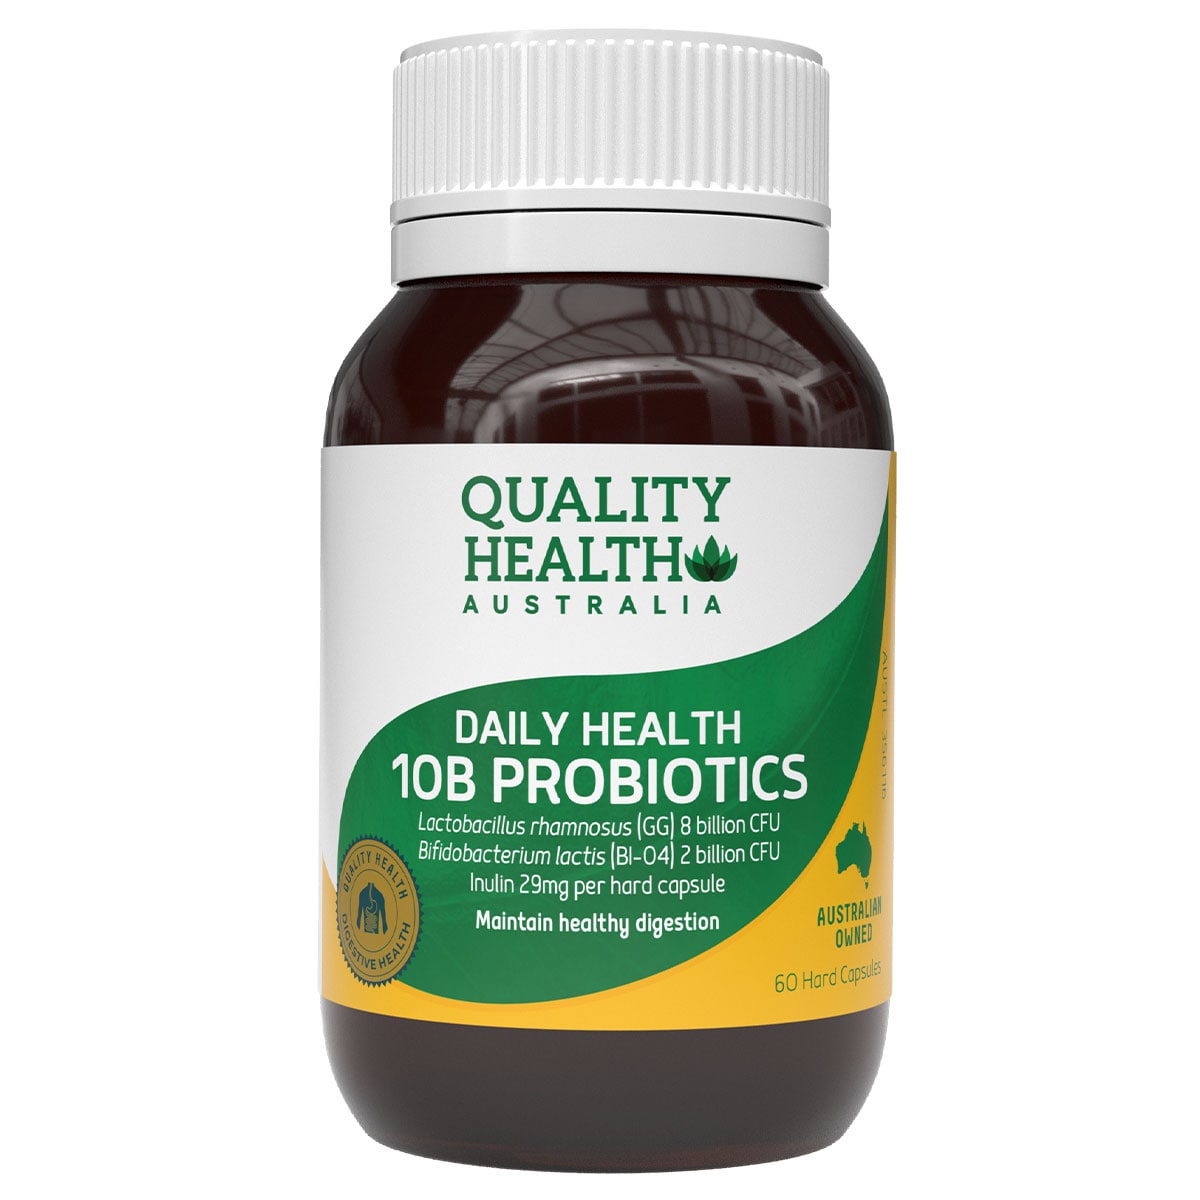 Quality Health Daily 10B Probiotics 60 Capsules Australia